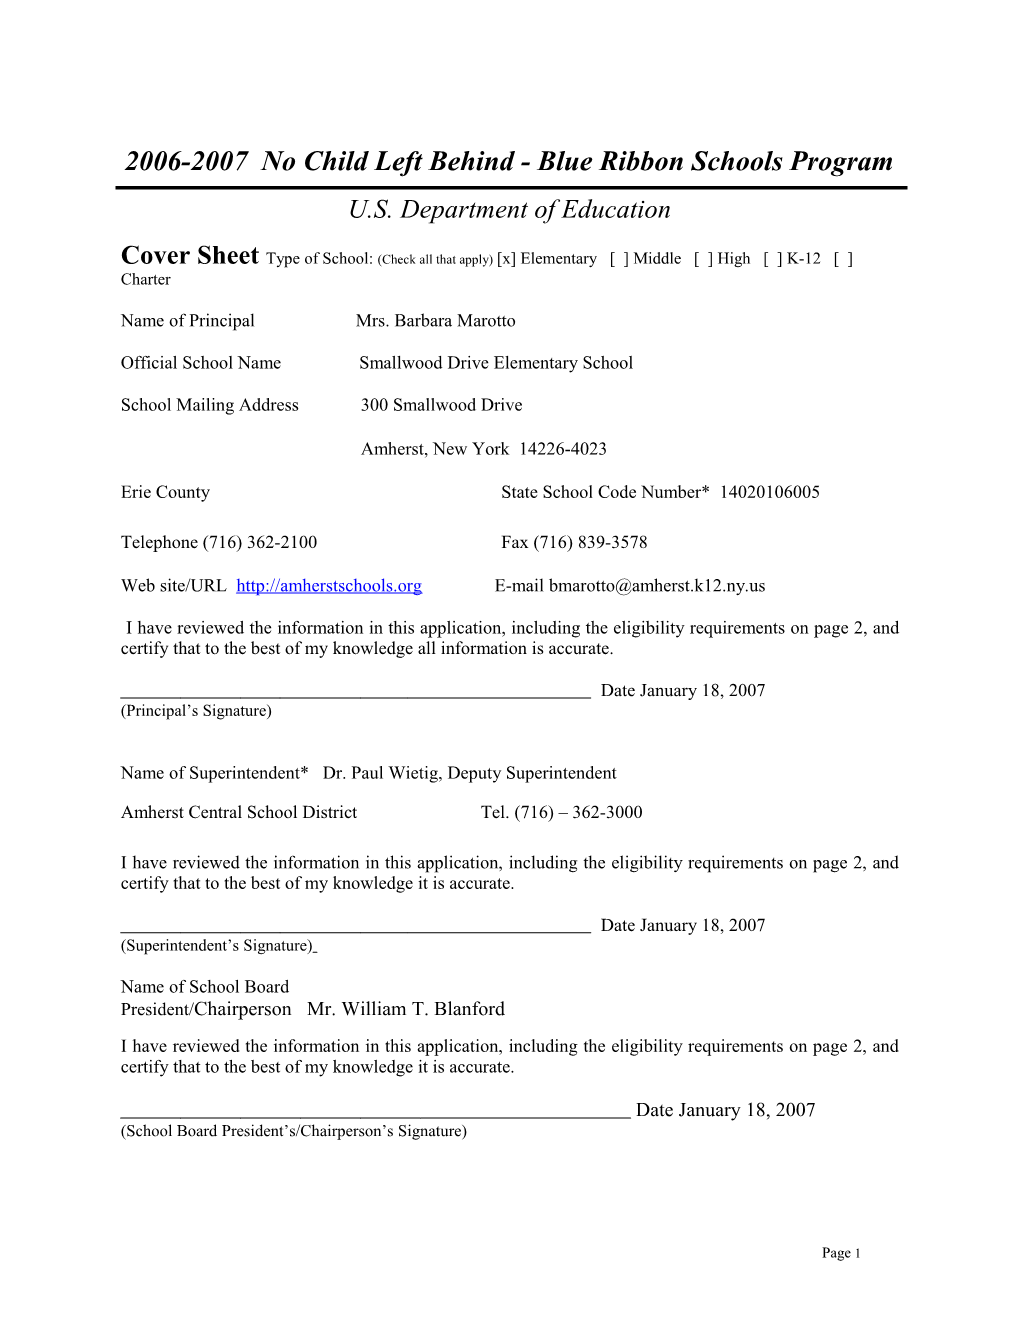 Application: 2006-2007, No Child Left Behind - Blue Ribbon Schools Program (MS Word) s10